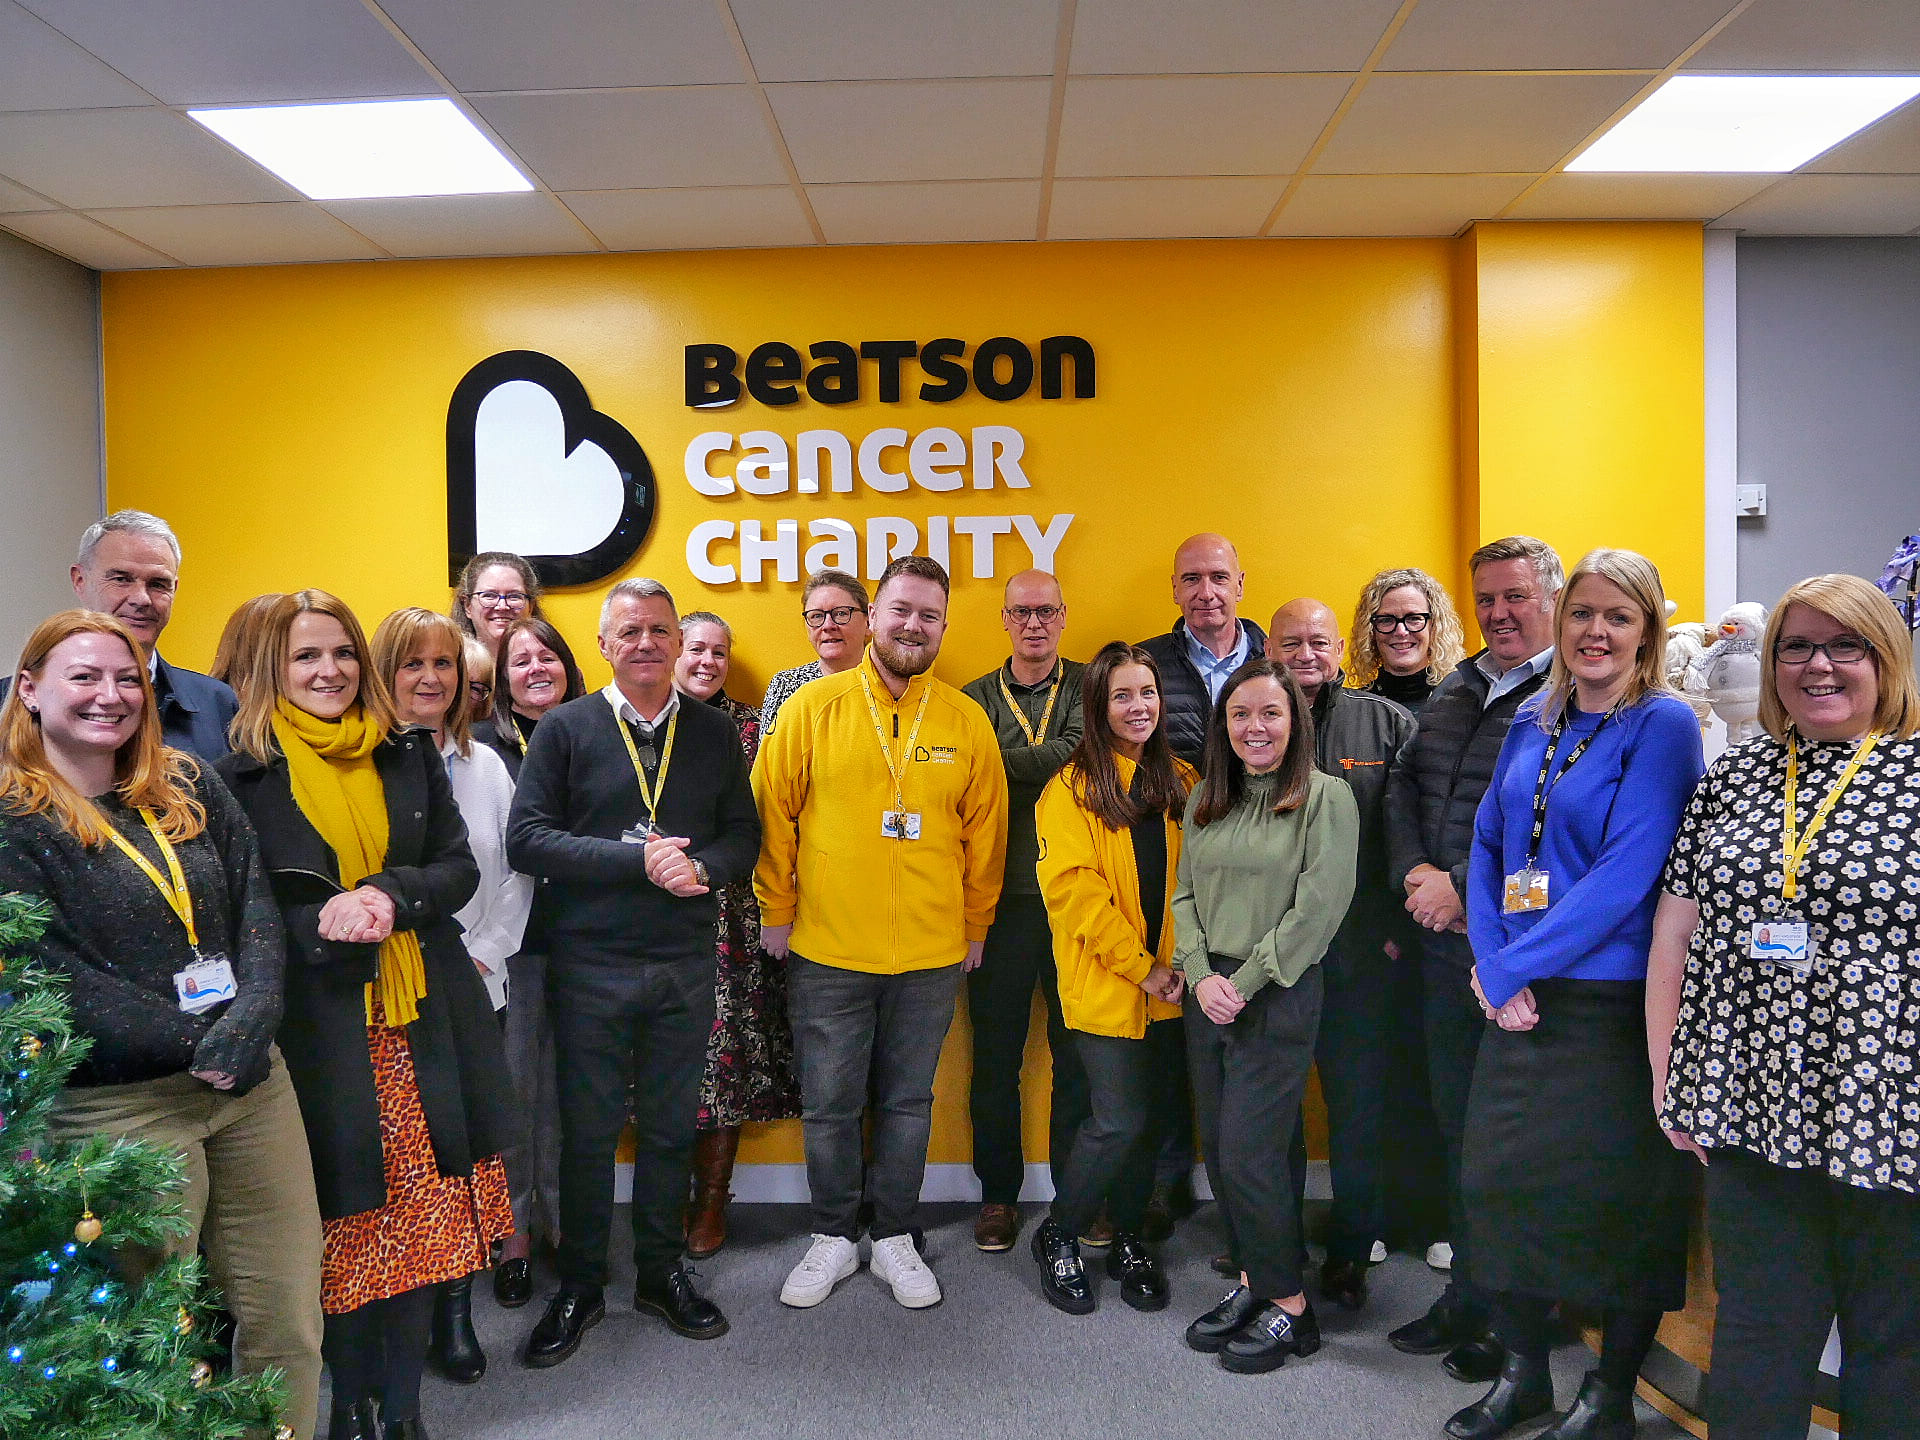 Scottish construction workforce champions Beatson Cancer Charity